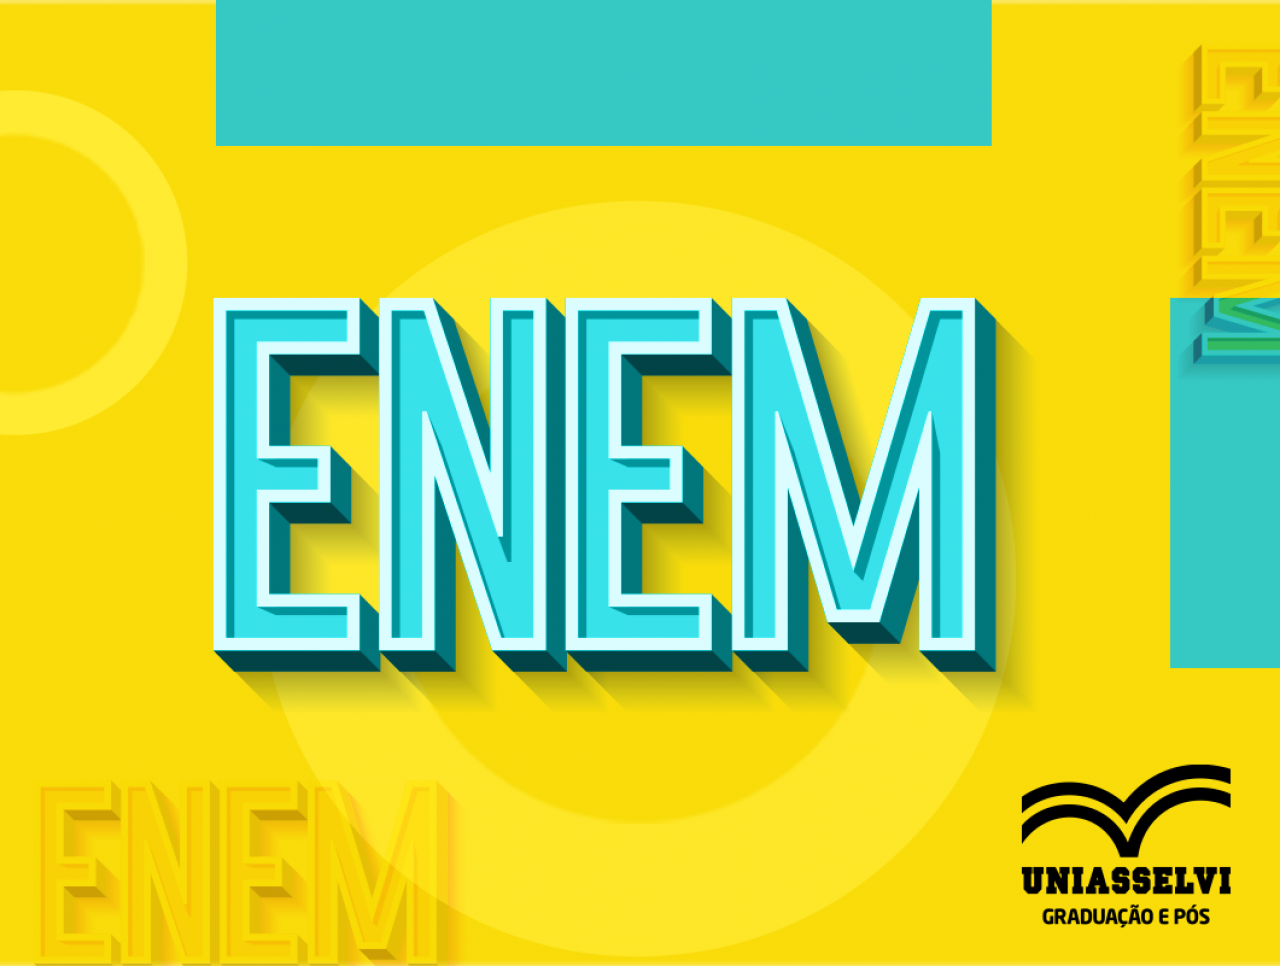  UNIASSELVI এবং Blog do Enem Enem 2022 এর জন্য বিনামূল্যে কোর্স অফার করে